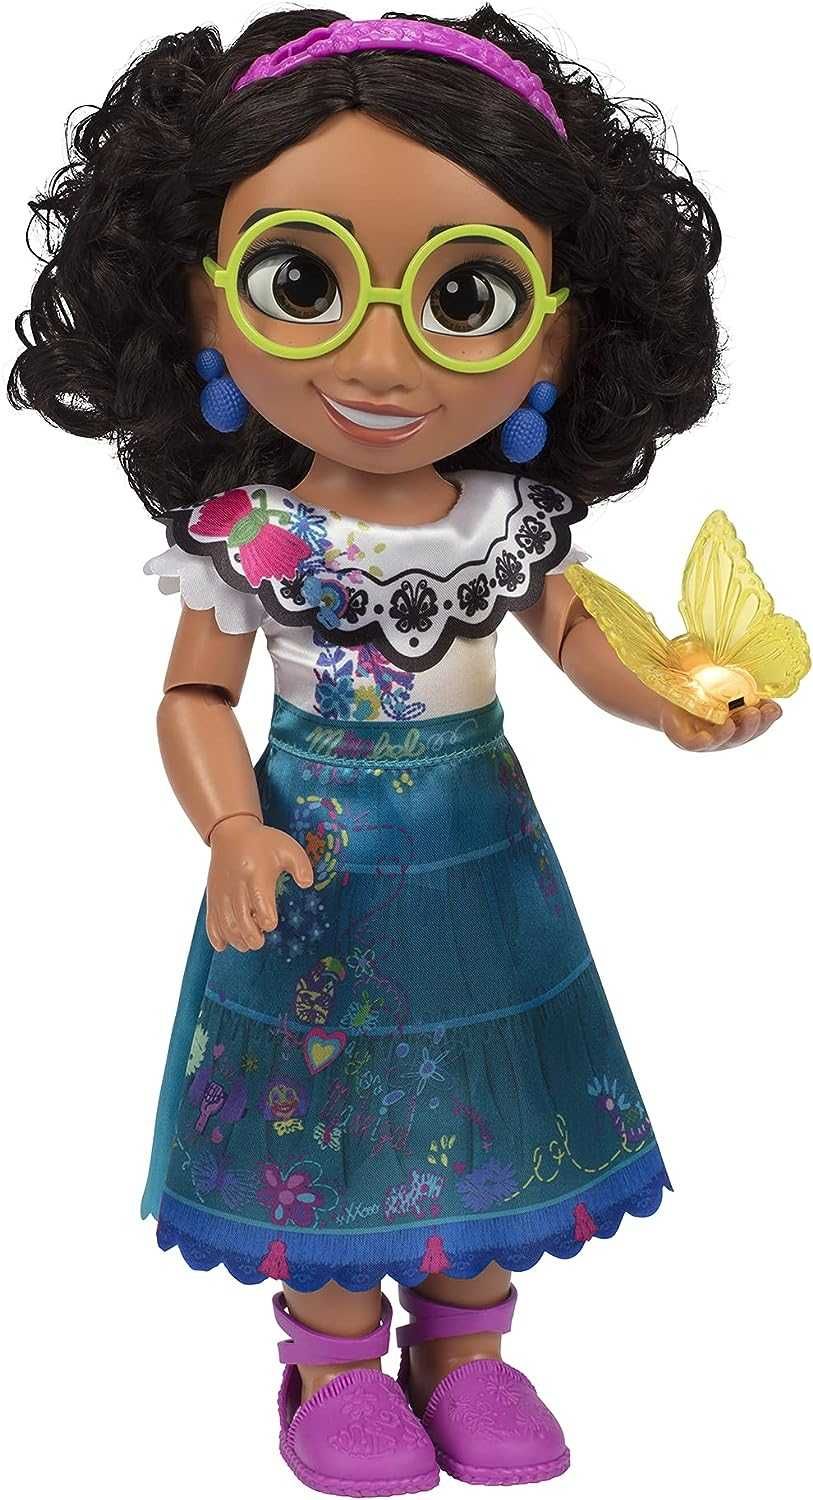 Лялька Енканто Мірабель Disney Encanto Mirabel Doll